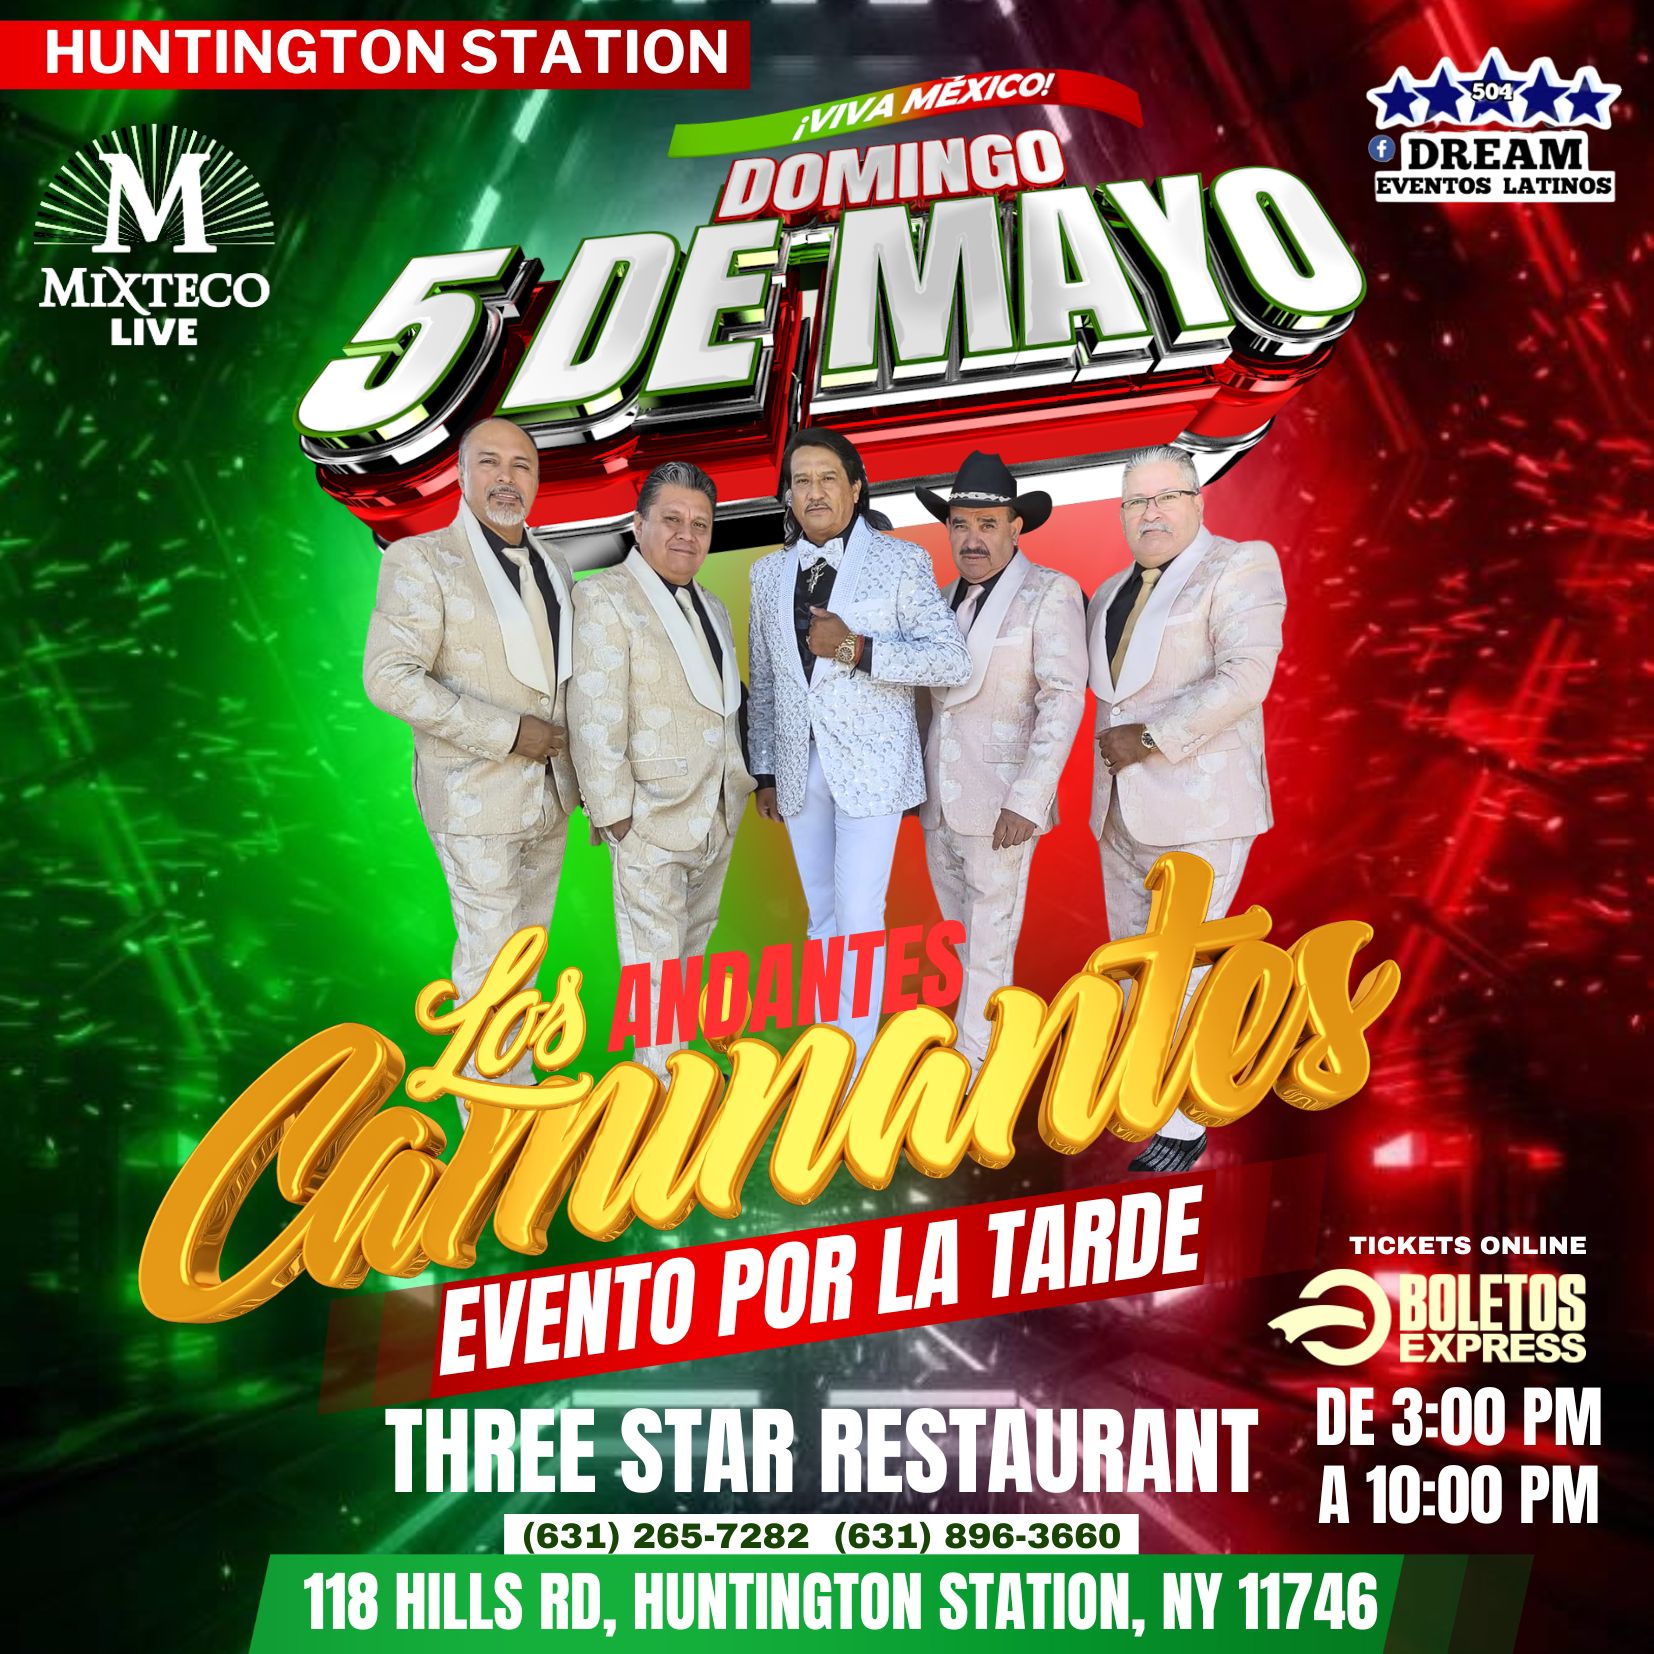 LOS  CAMINANTES andanteLive Domingo 5 Mayo / Huntington station 3 pm a 10pm una  tardeada